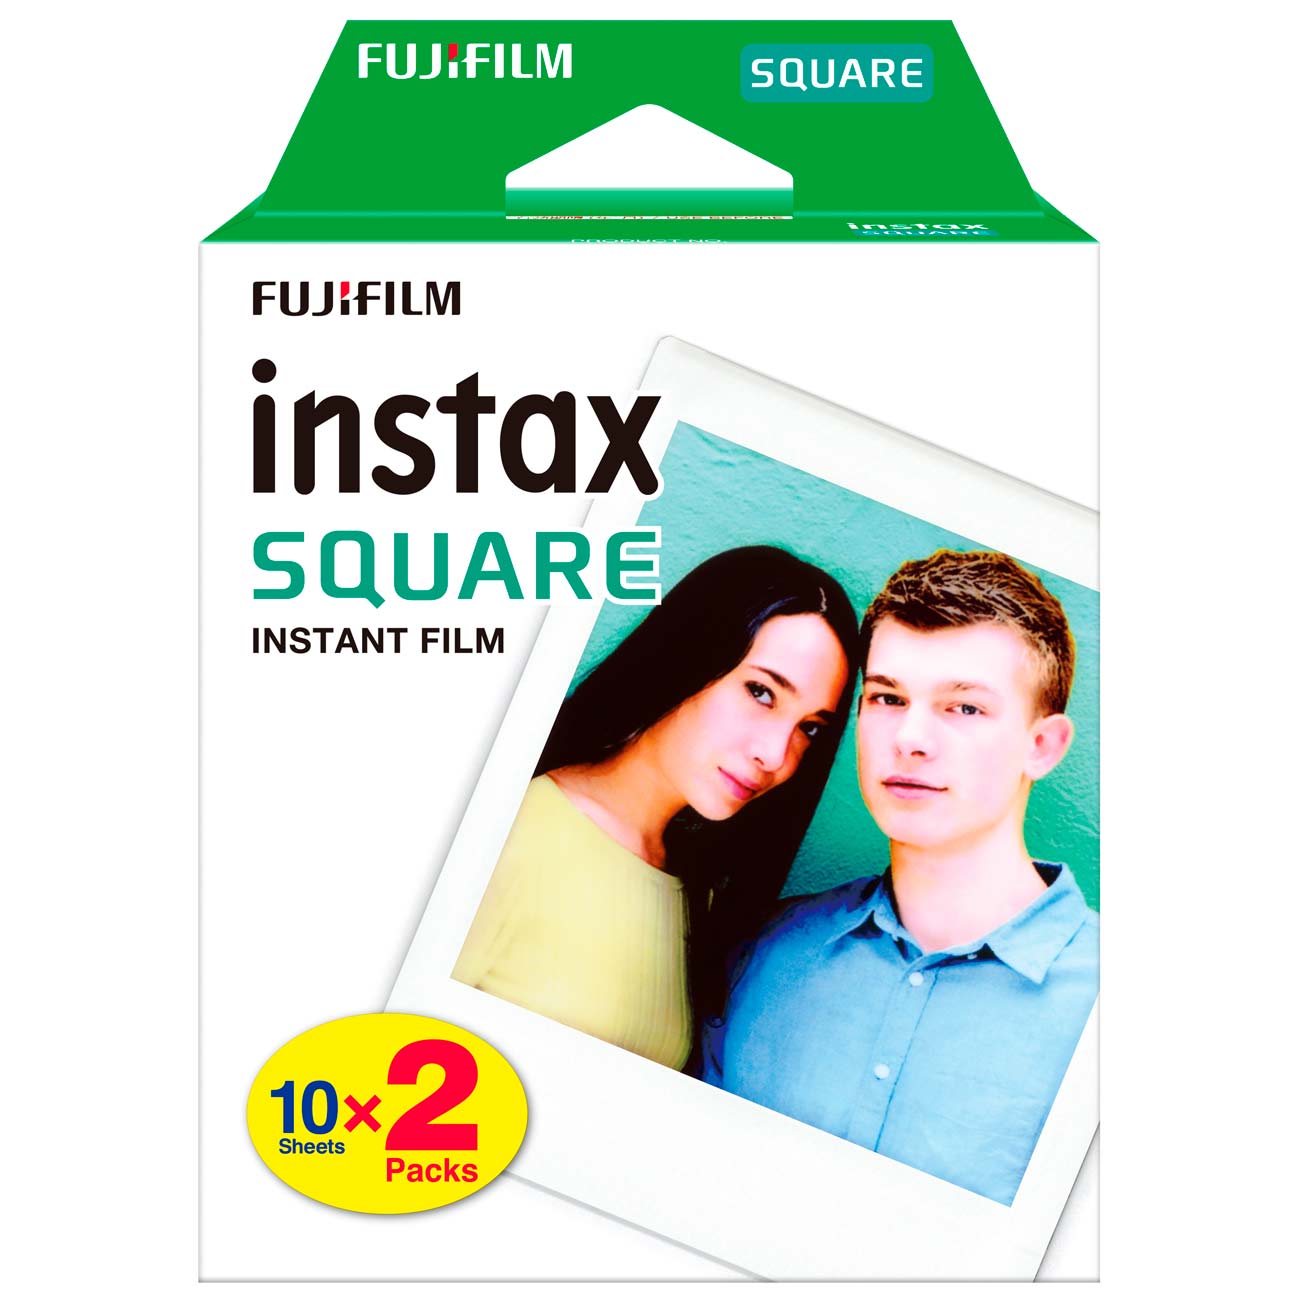 Ф/пл Fujifilm INSTAX SQUARE 10x2